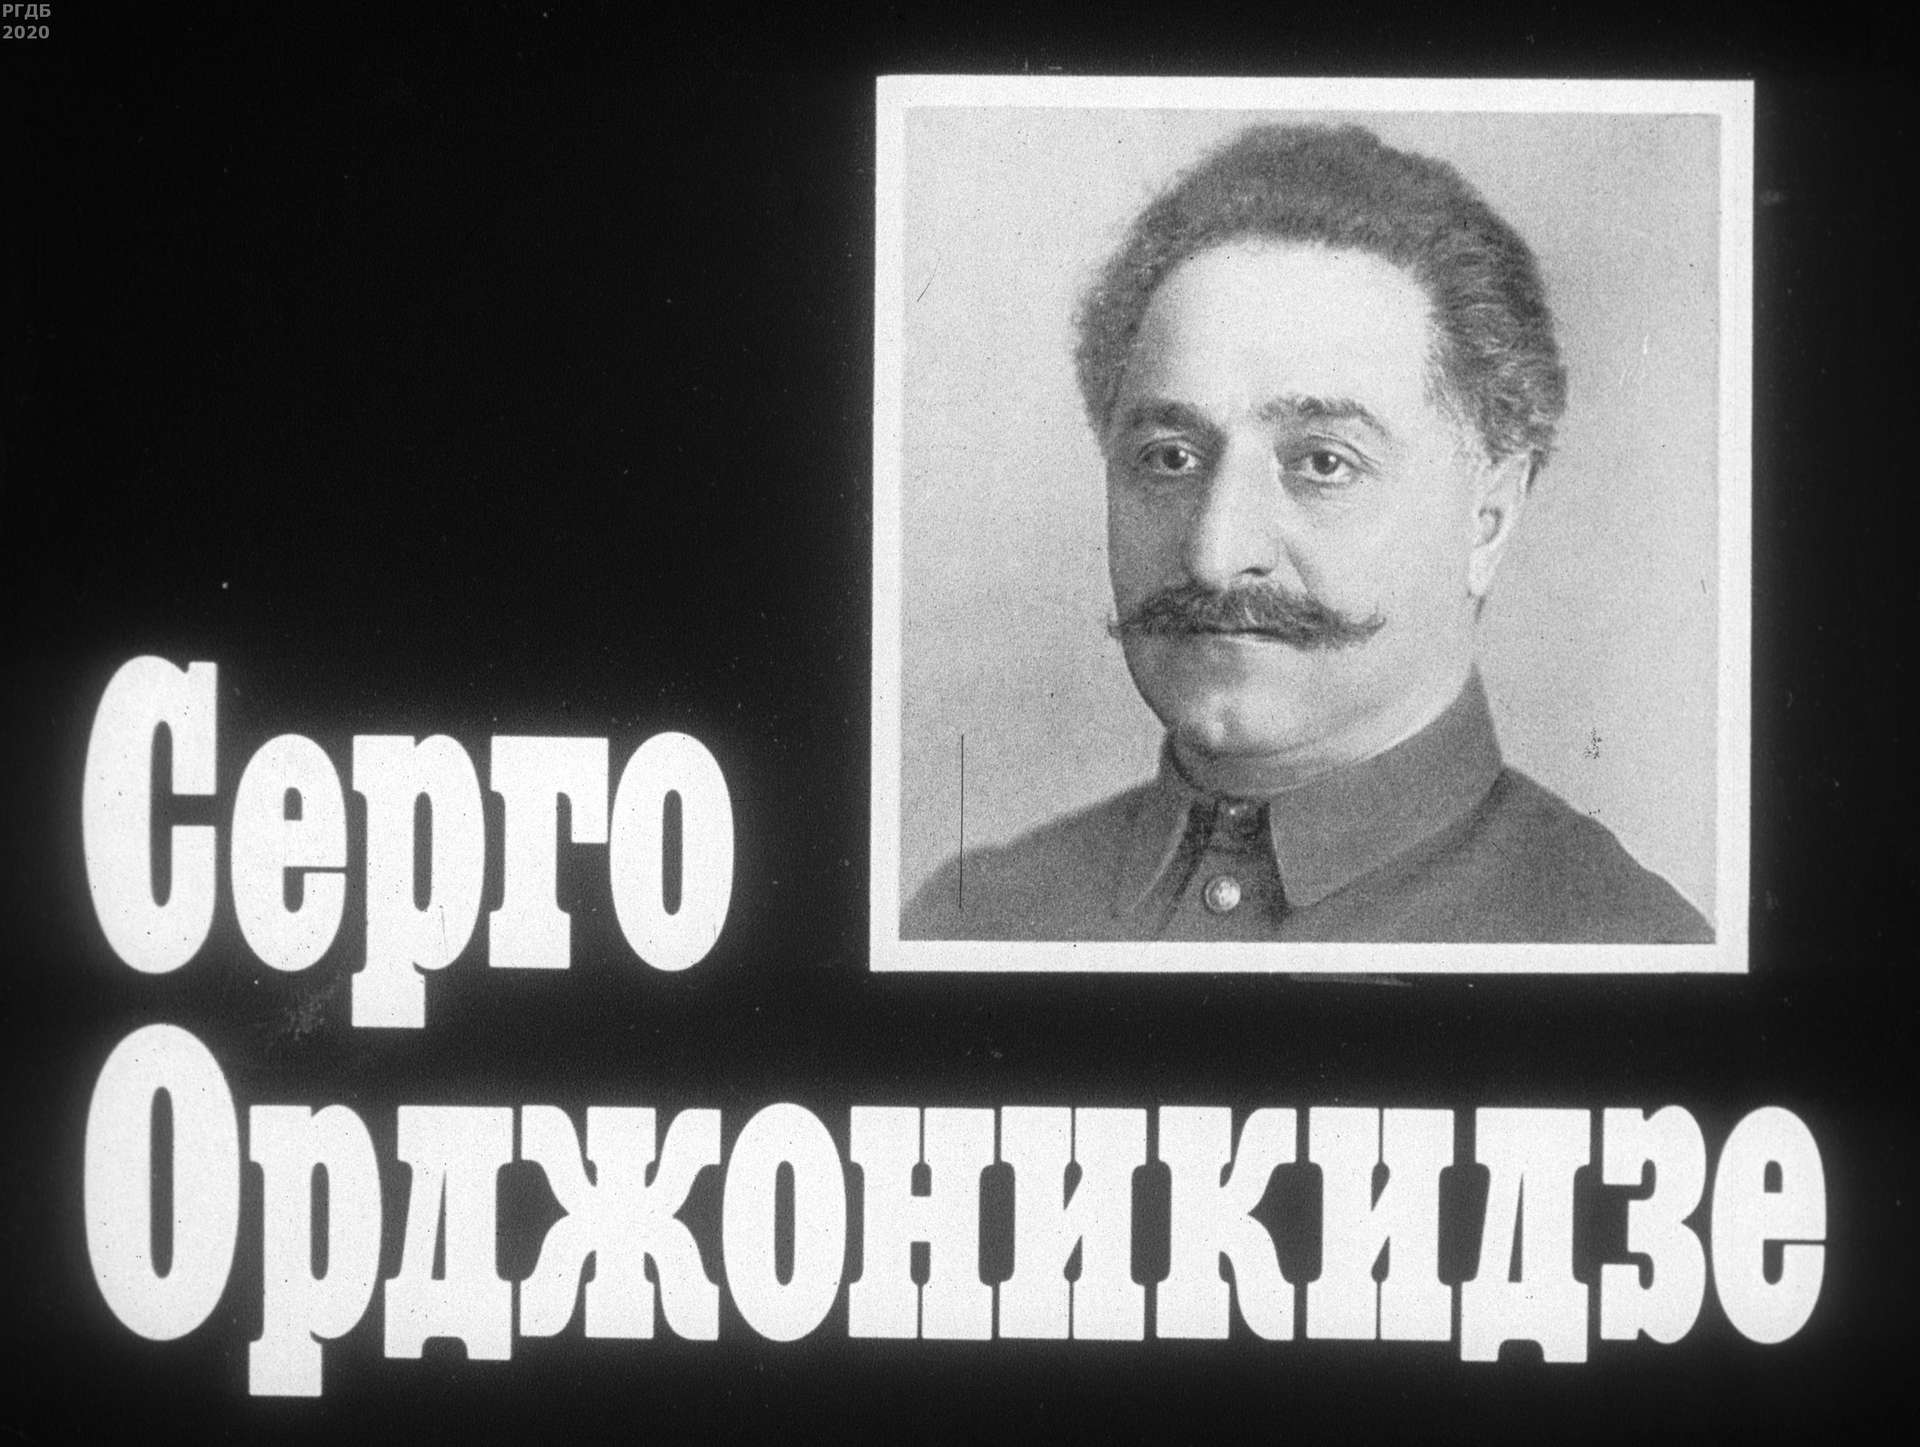 Шагалов А. - Серго Орджоникидзе - 1986